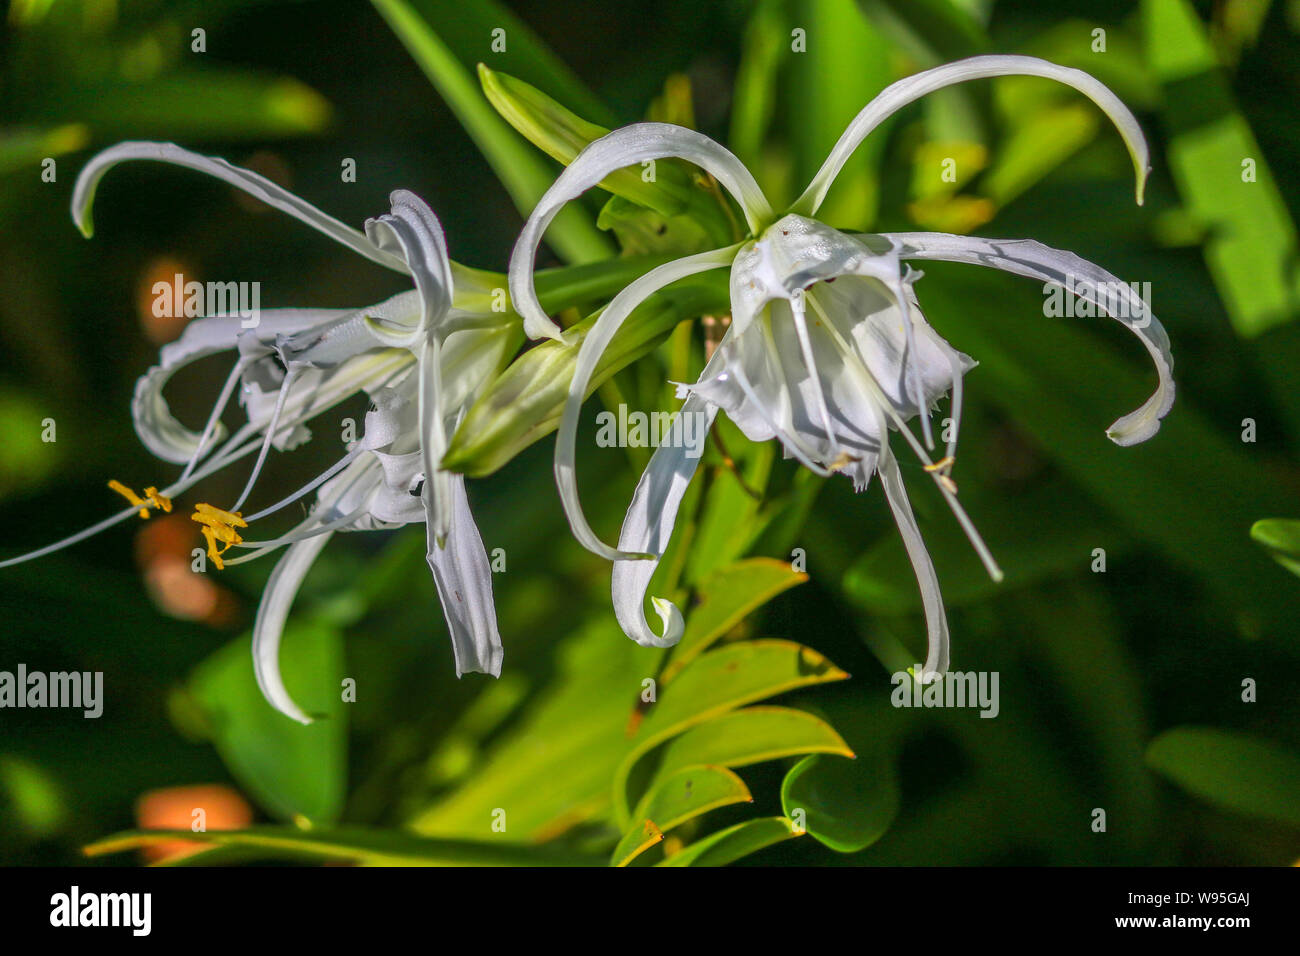 Spider lily growing in Adelaide Botanic Gardens, Australia Stock Photo